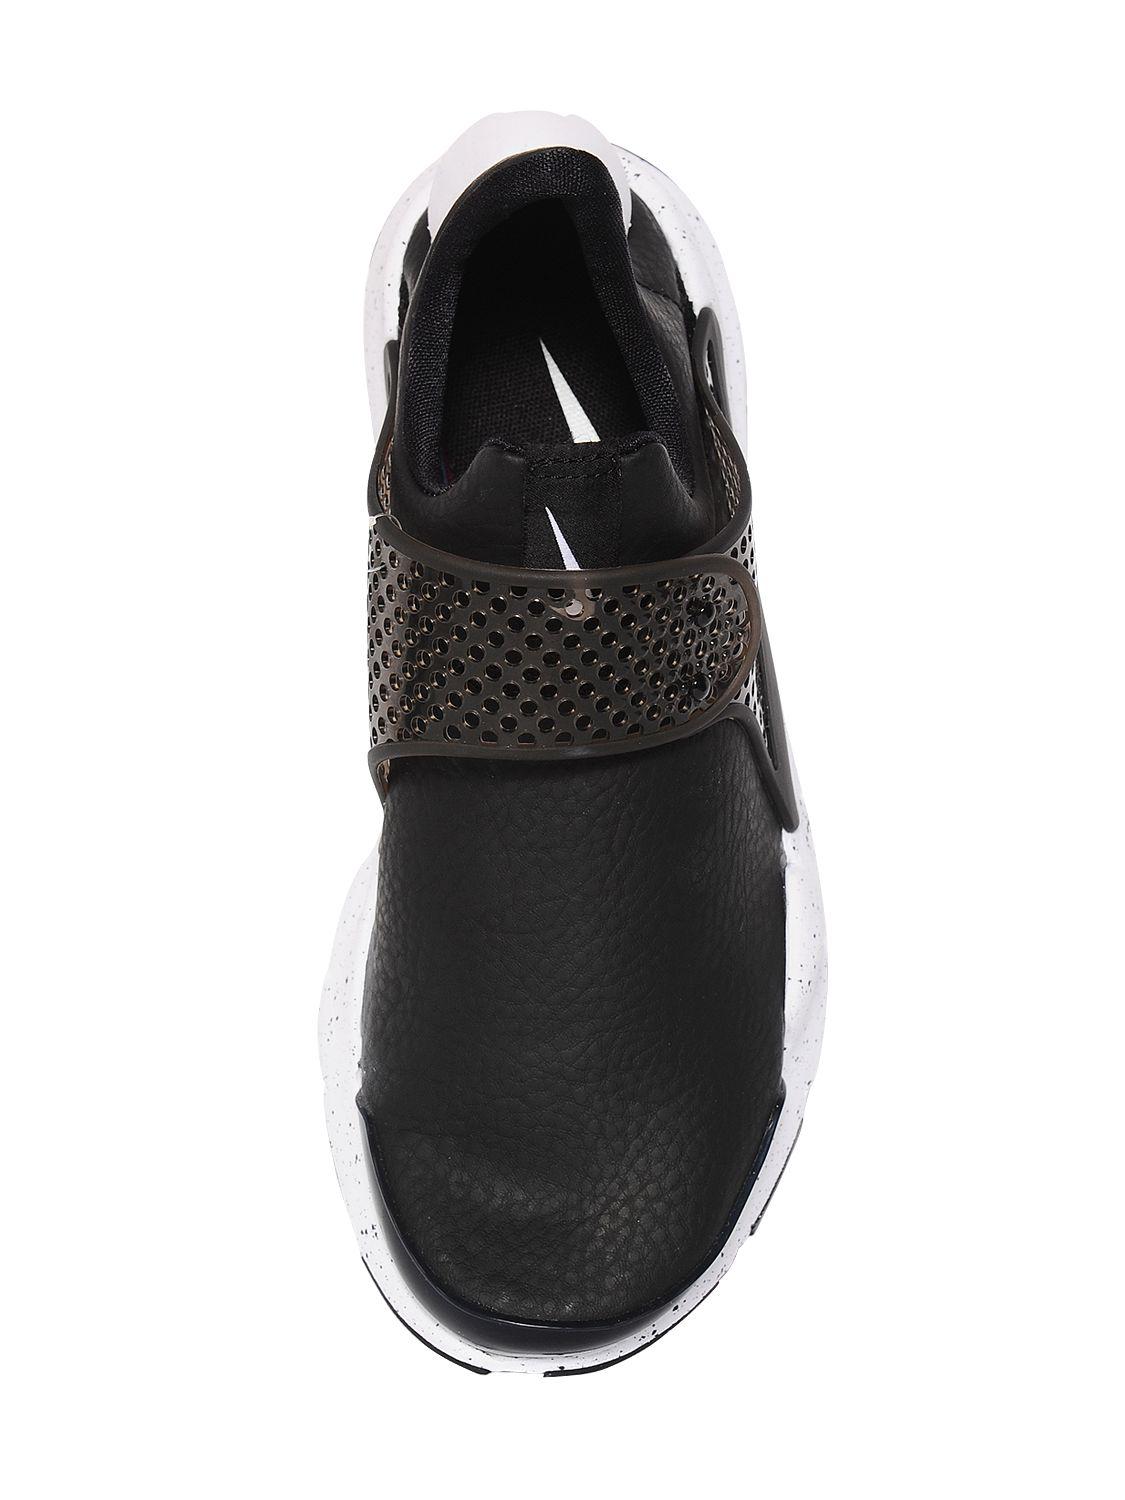 Nike Sock Dart Premium Faux Leather Sneakers in Black for Men - Lyst